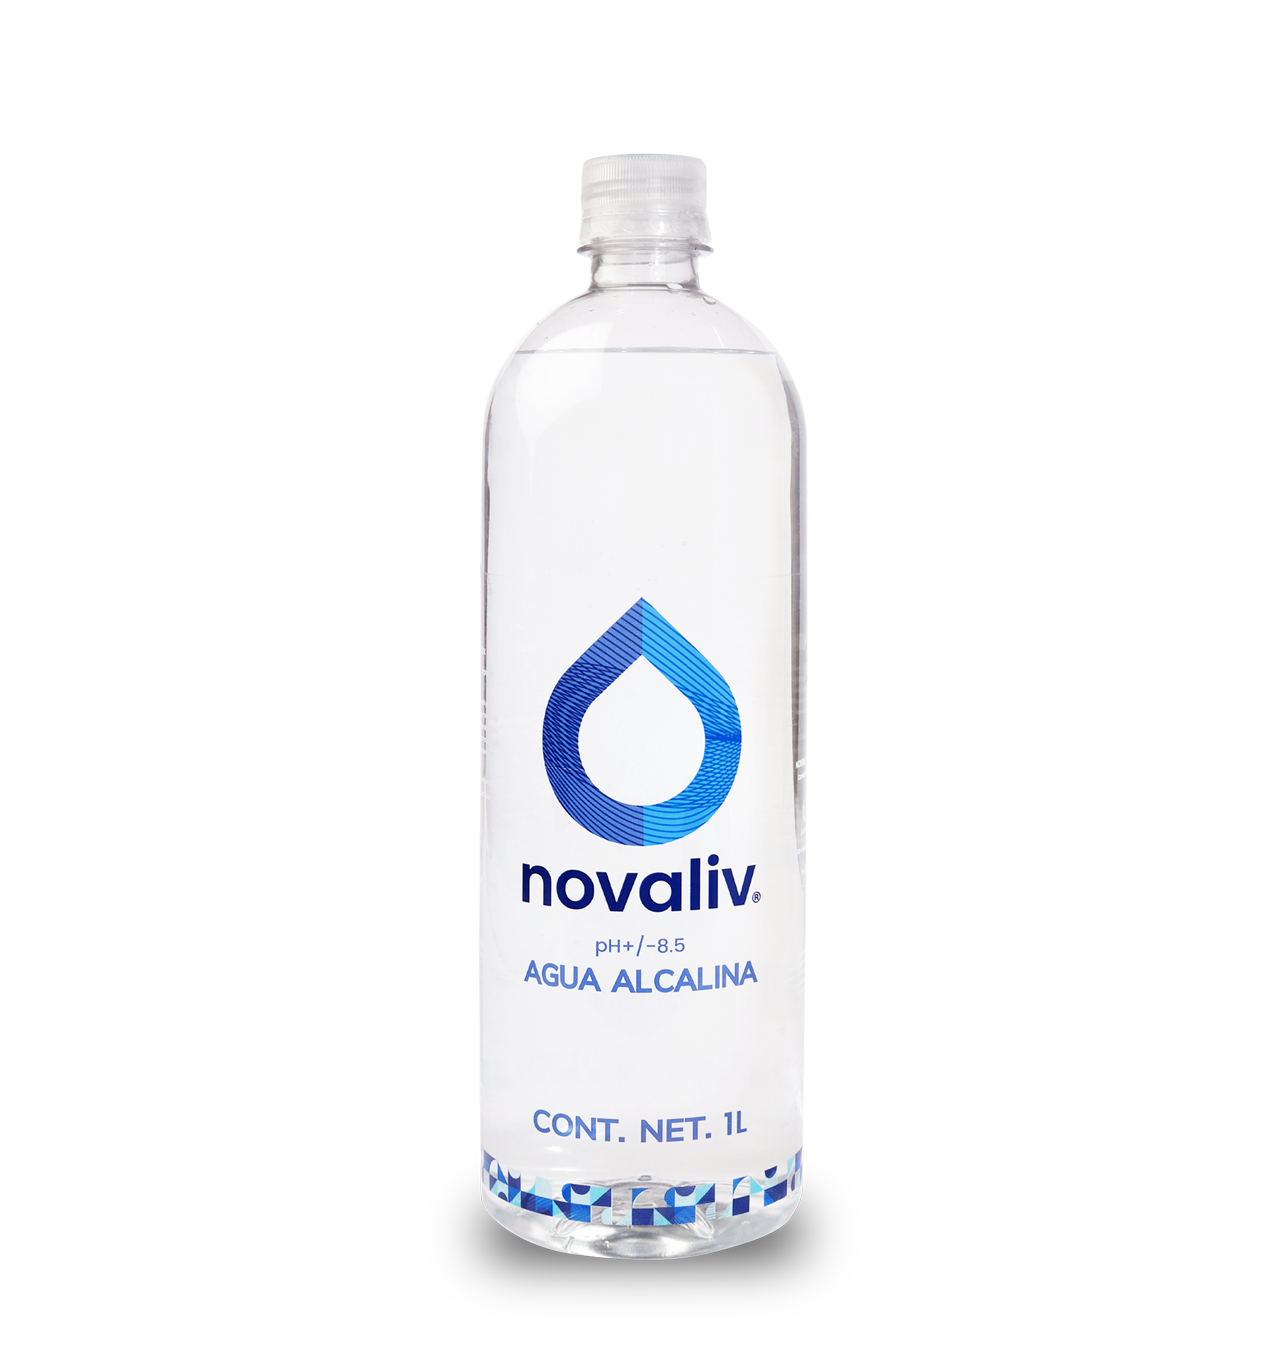 Novaliv Agua Alcalina 12 x 1 L - Novaliv